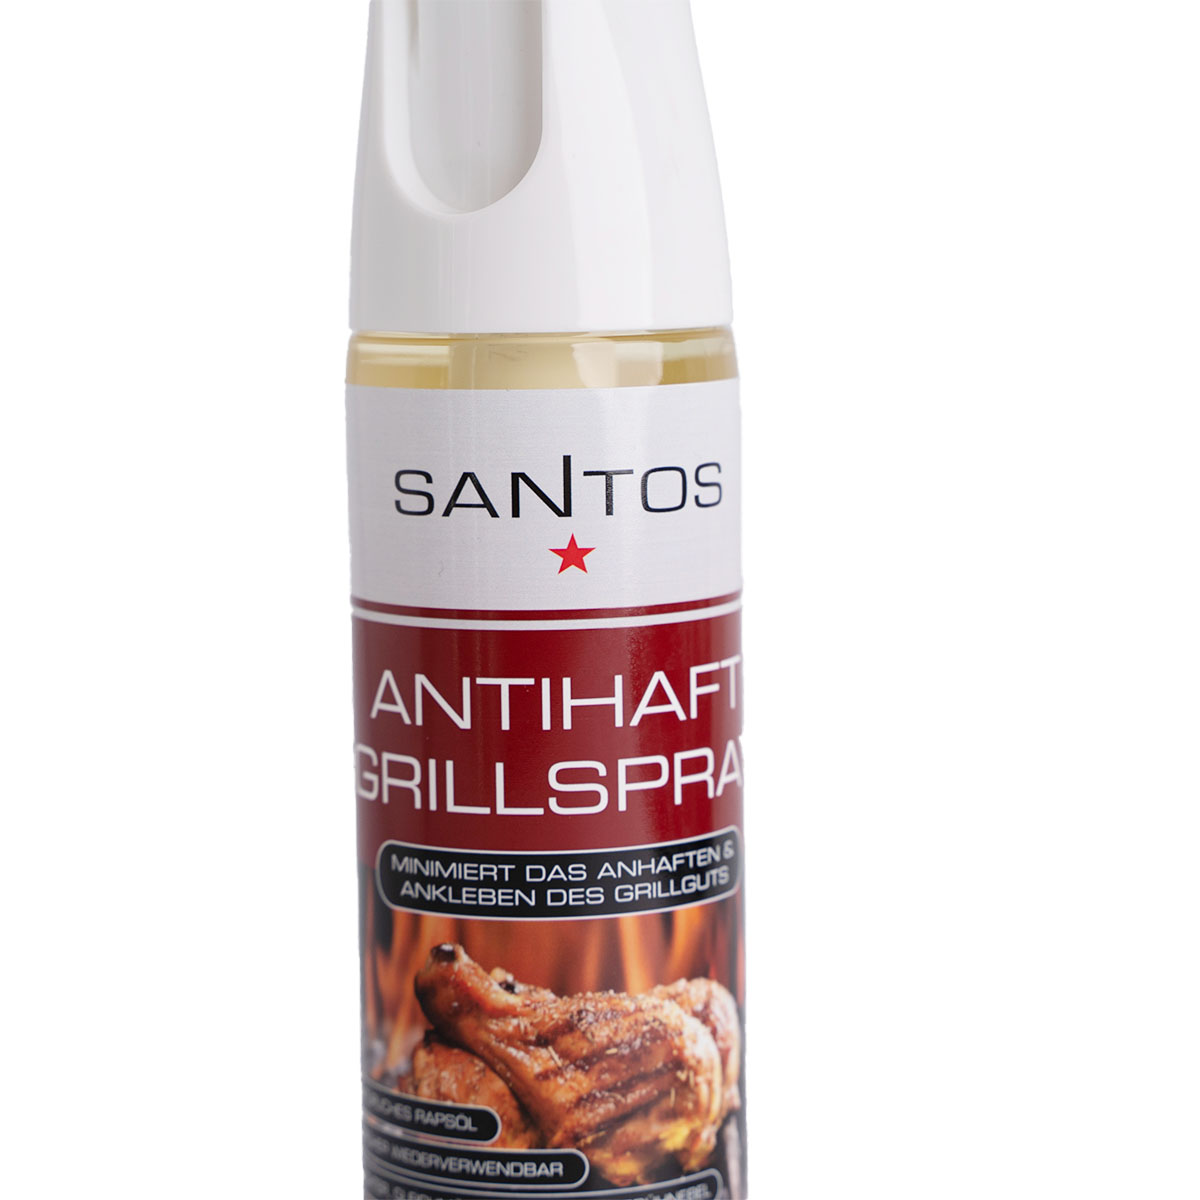 SANTOS Antihaft Grillspray 280 ml